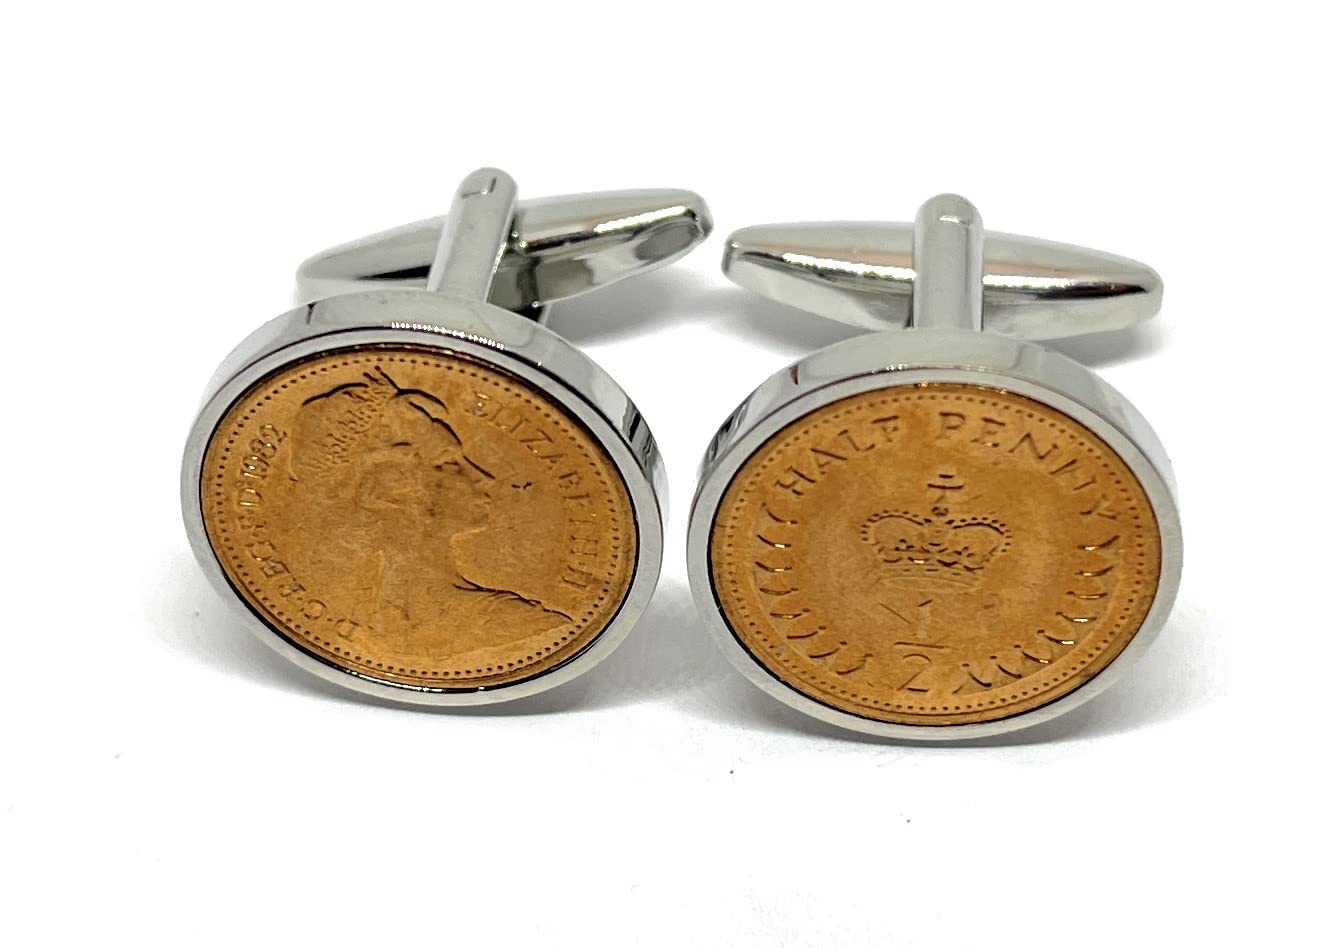 1982 40th Birthday / Anniversary Half pence coin cufflinks - Half pence cufflinks from 1982 for a 40th Birthday